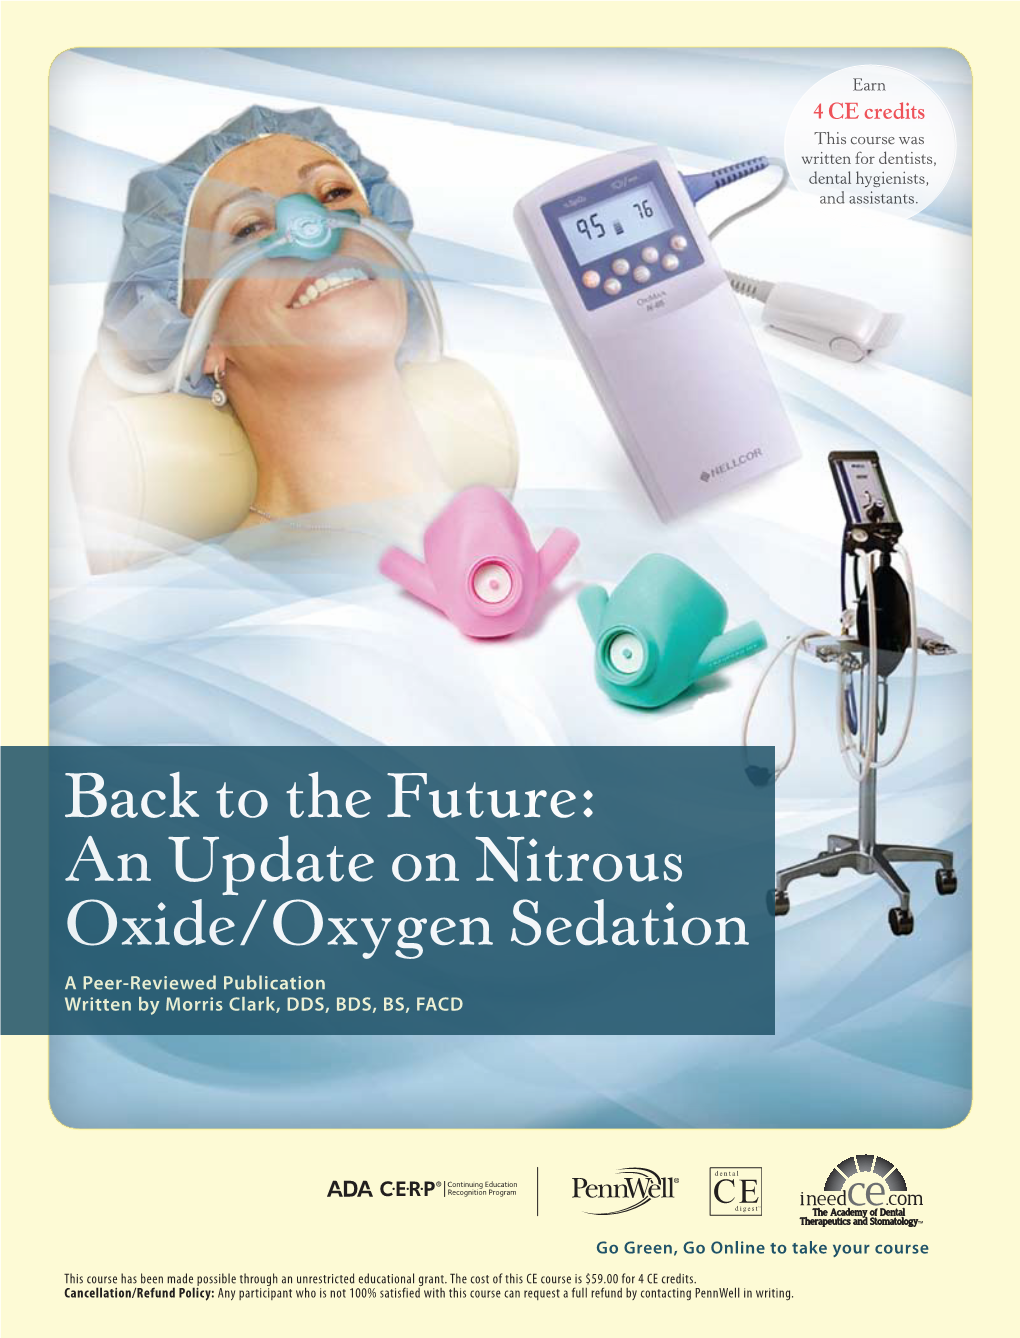 An Update on Nitrous Oxide/Oxygen Sedation a Peer-Reviewed Publication Written by Morris Clark, DDS, BDS, BS, FACD